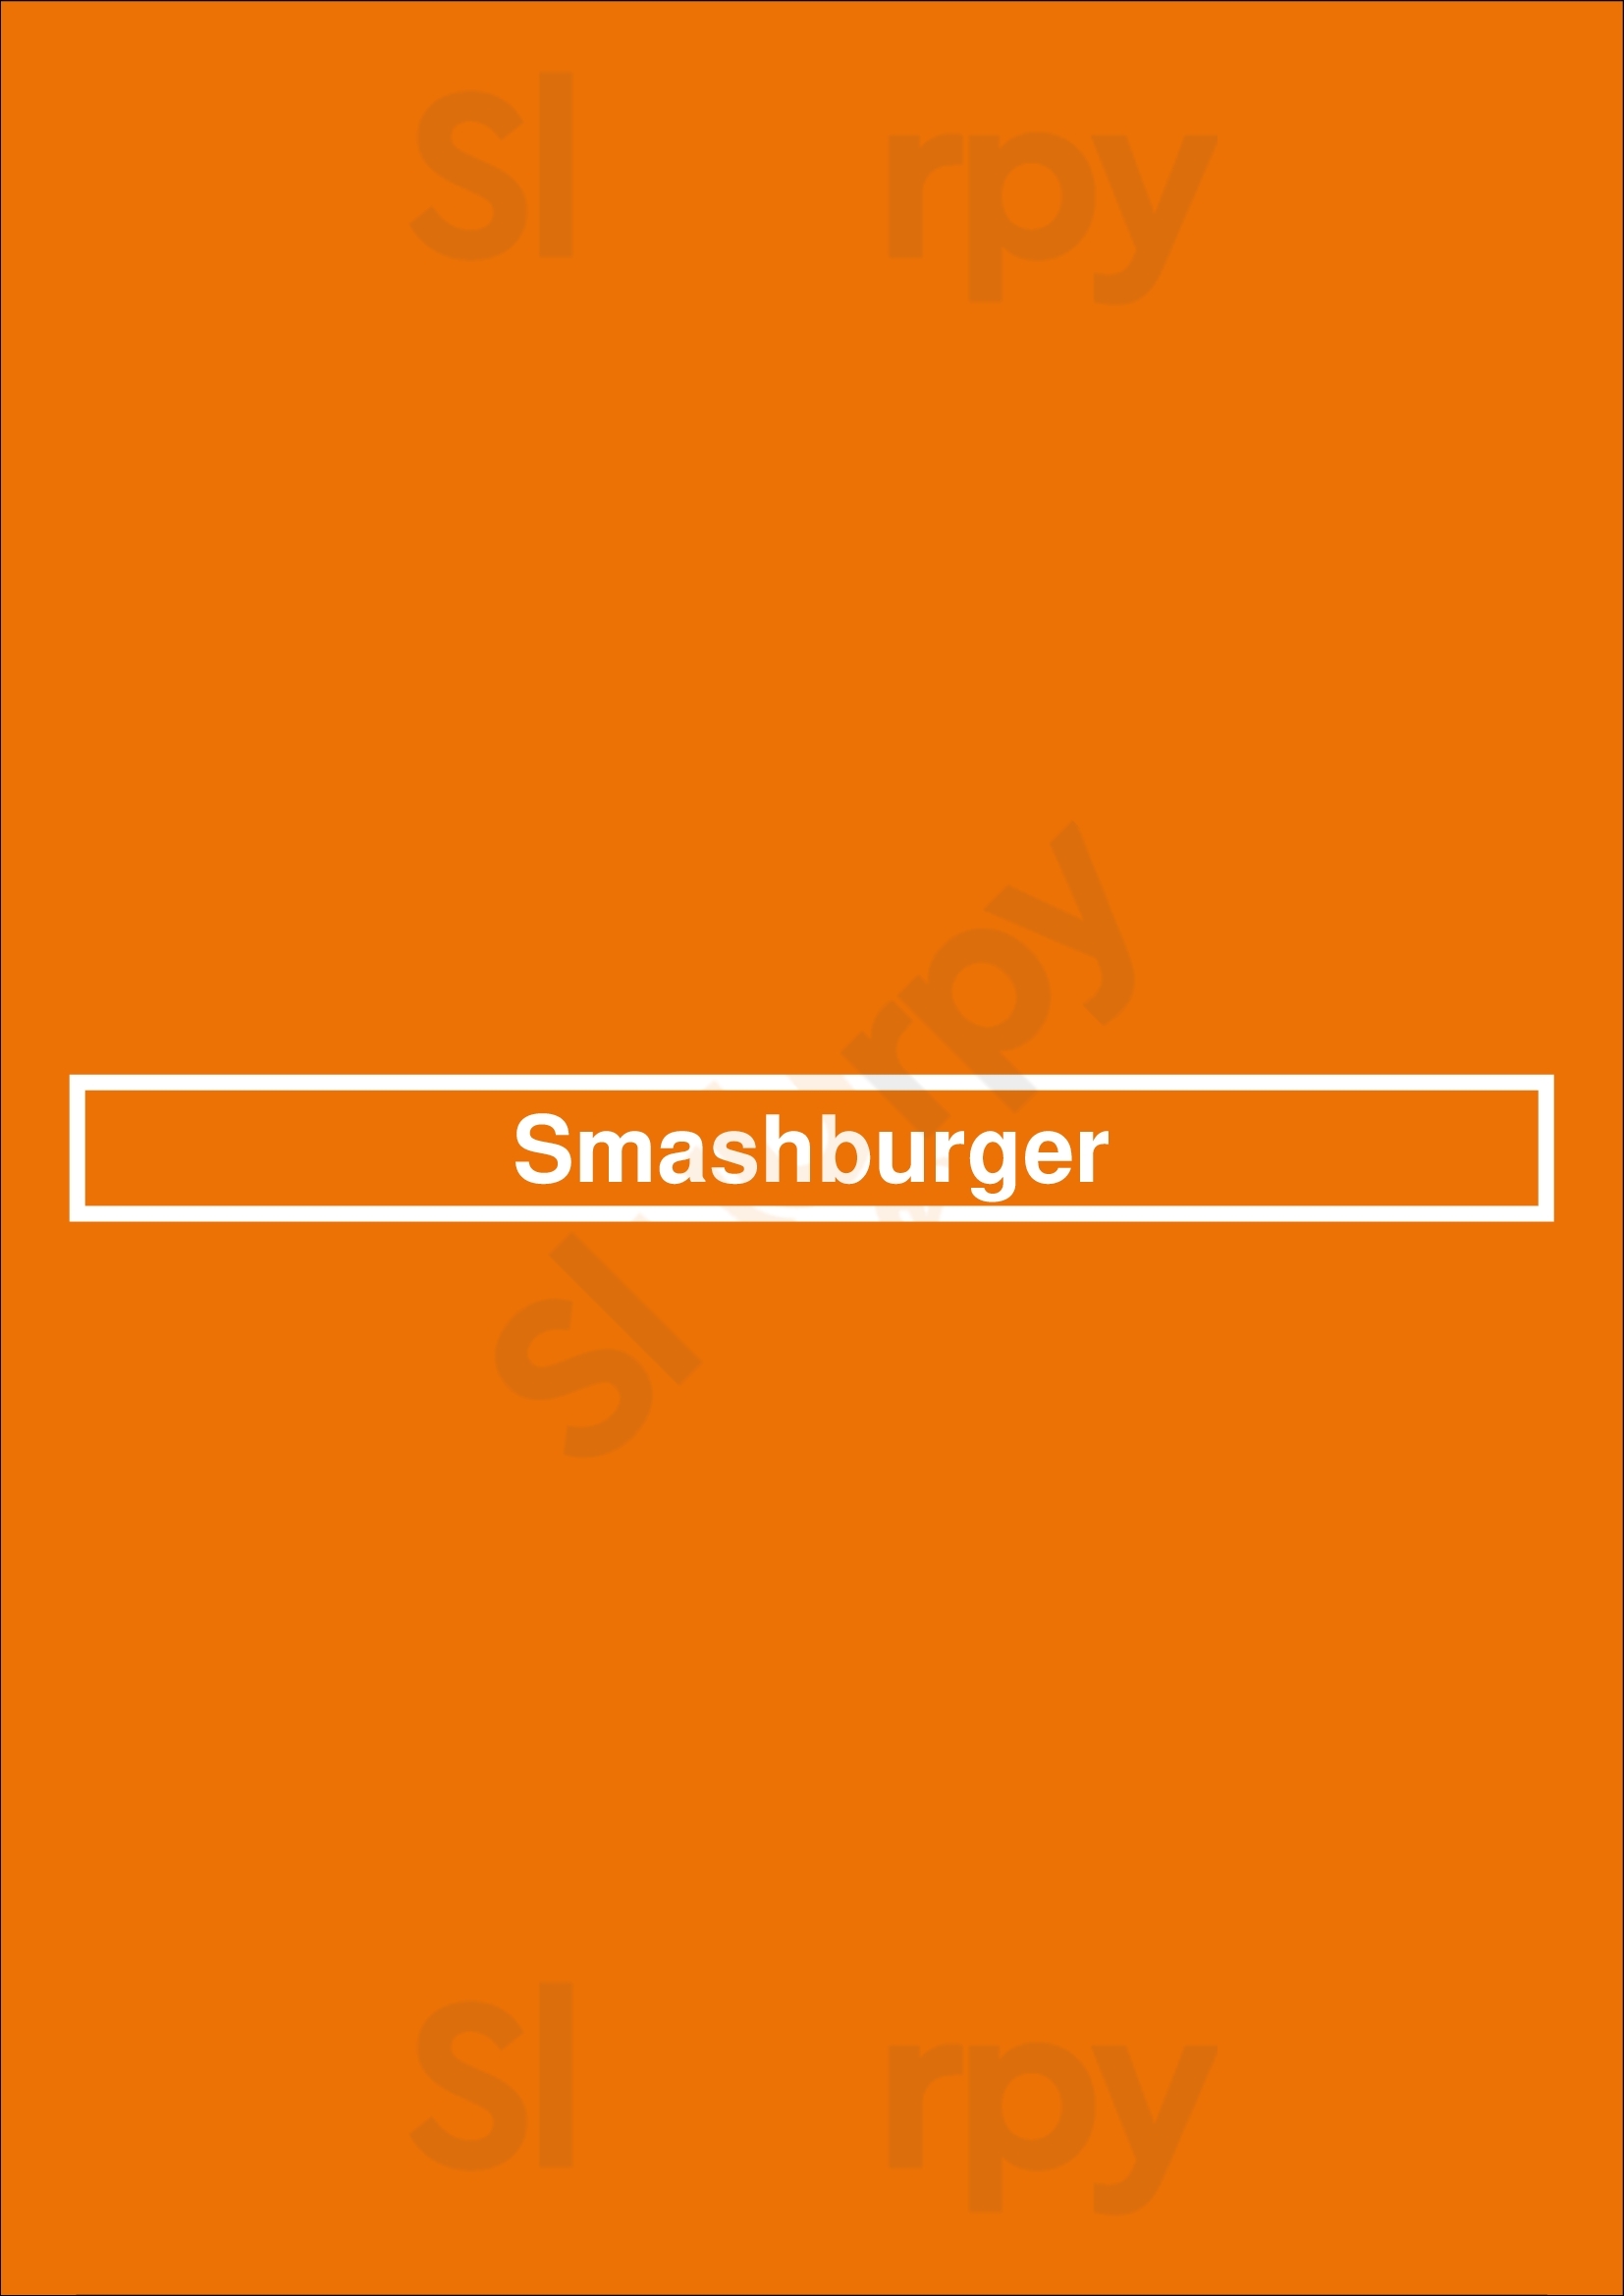 Smashburger Scottsdale Menu - 1